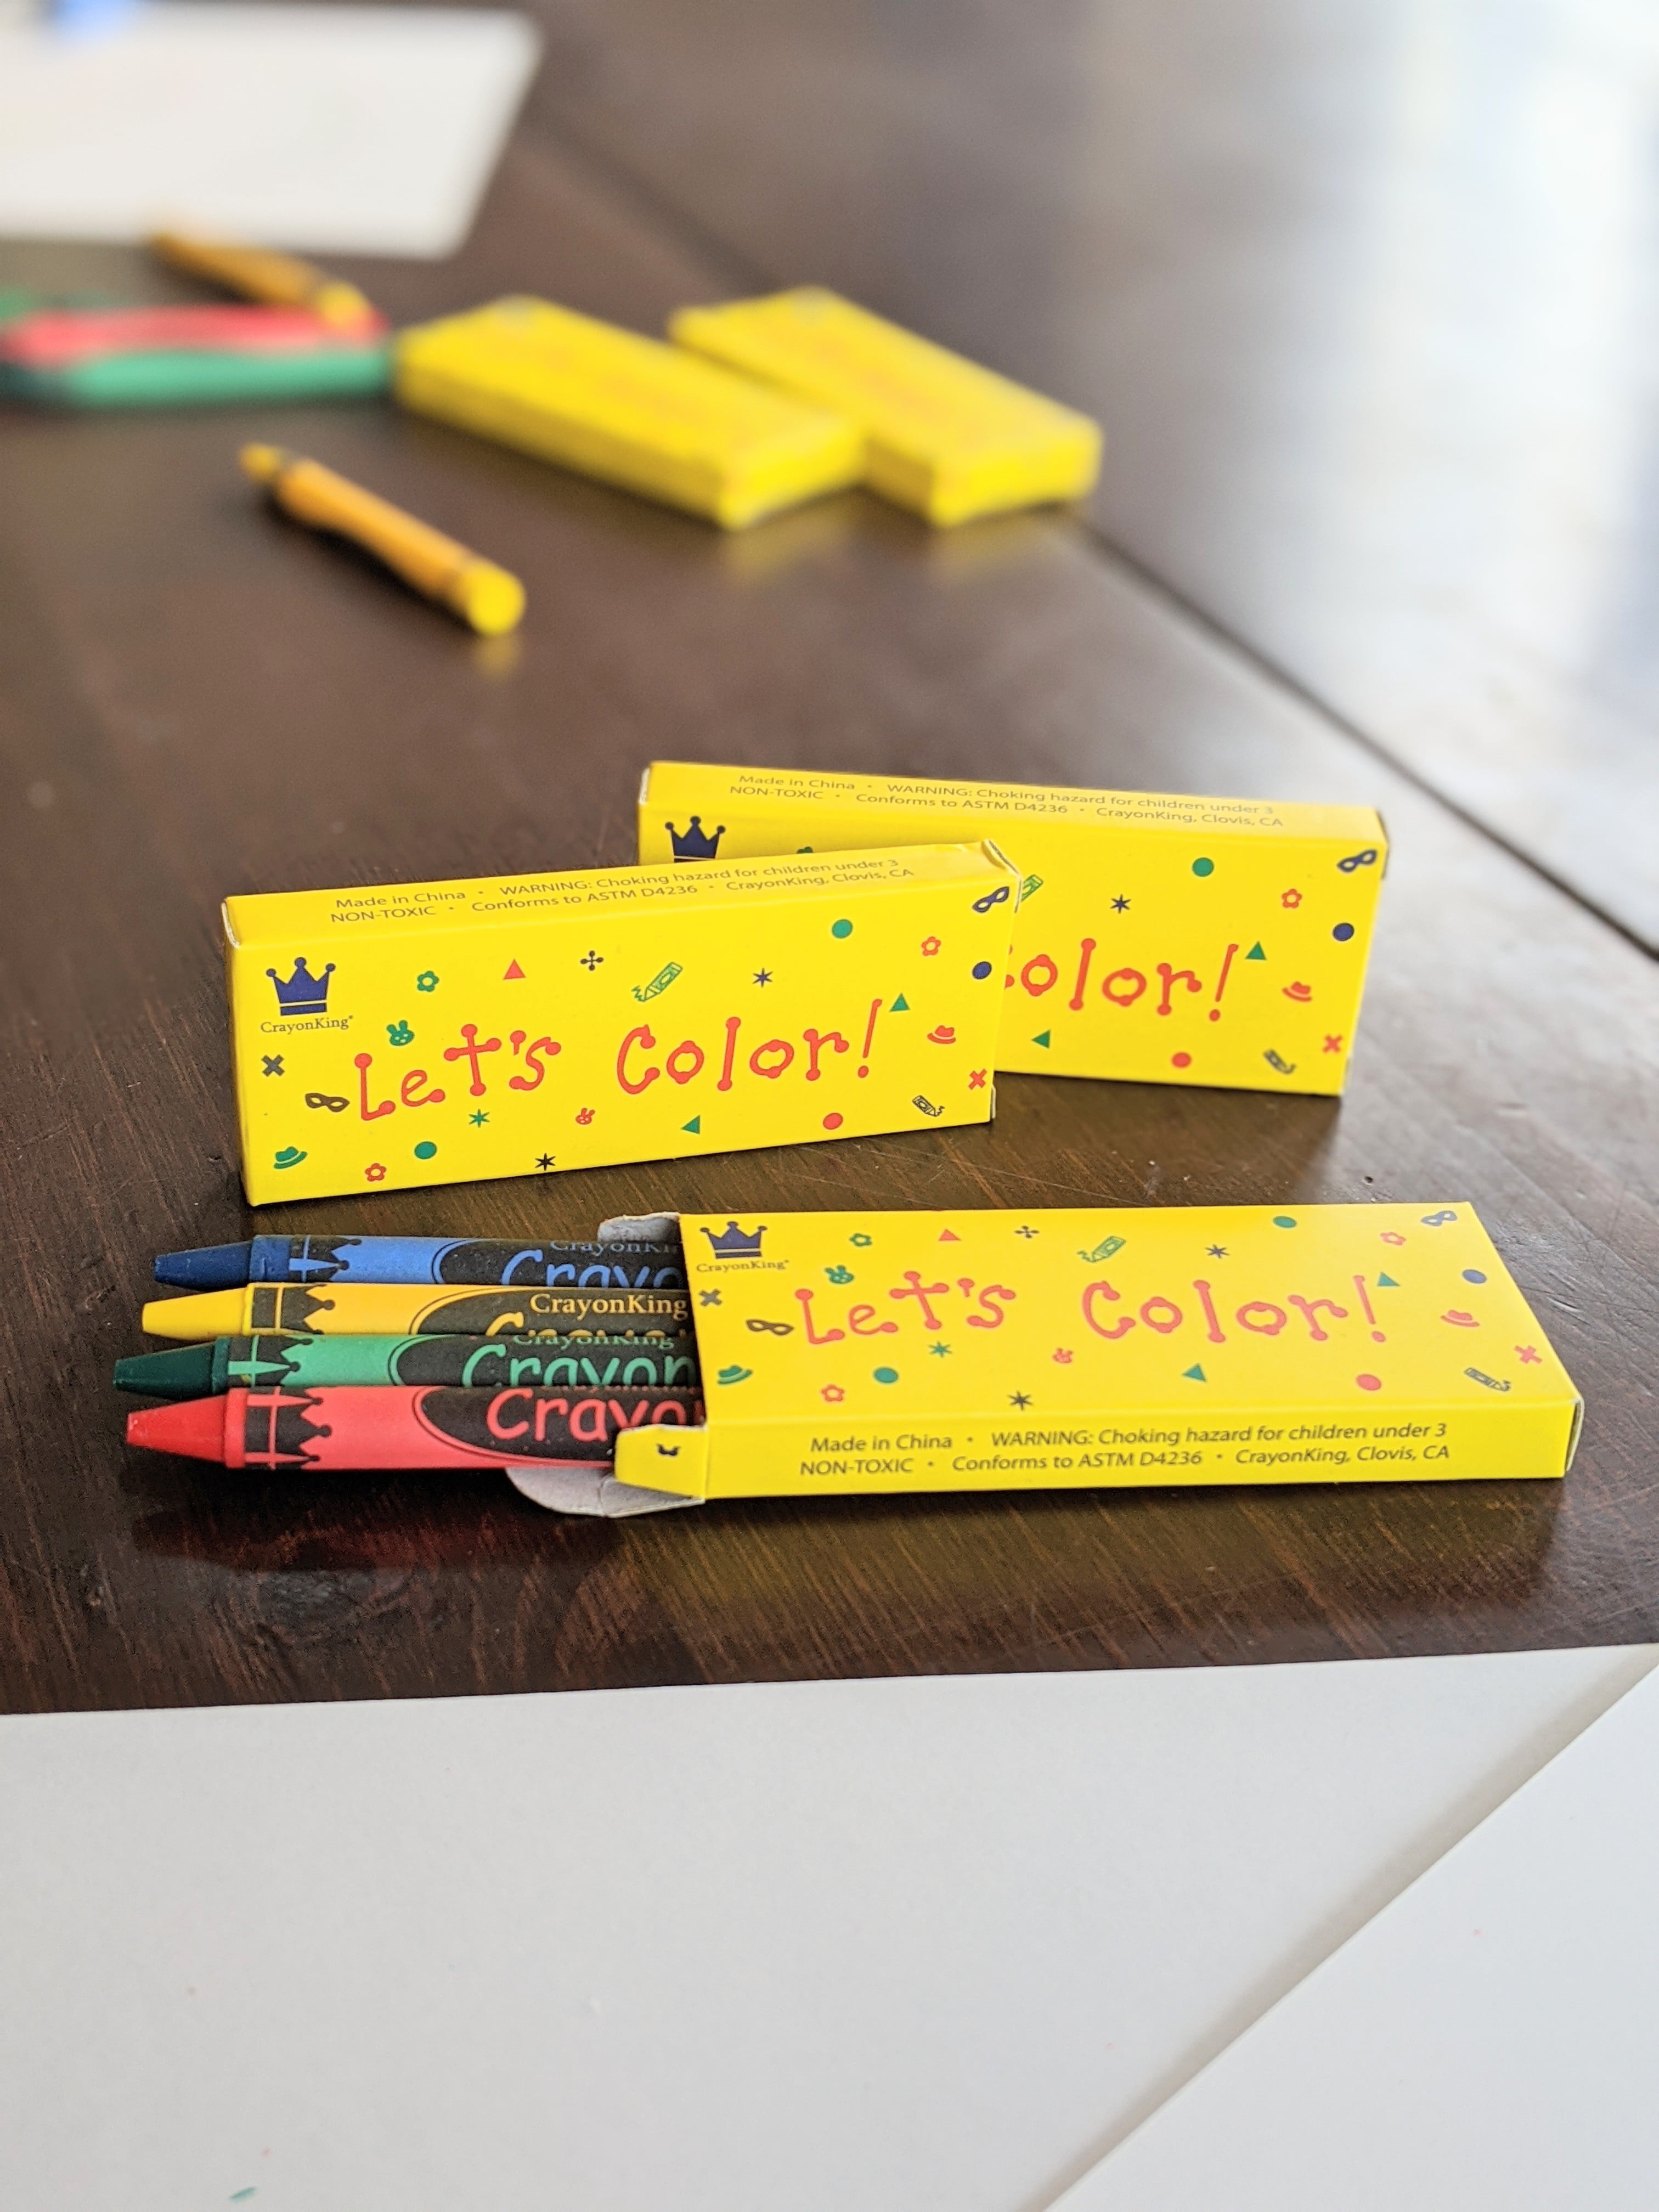 Crayon King Bulk Crayons - 4 Packs, Various Sizing — CrayonKing